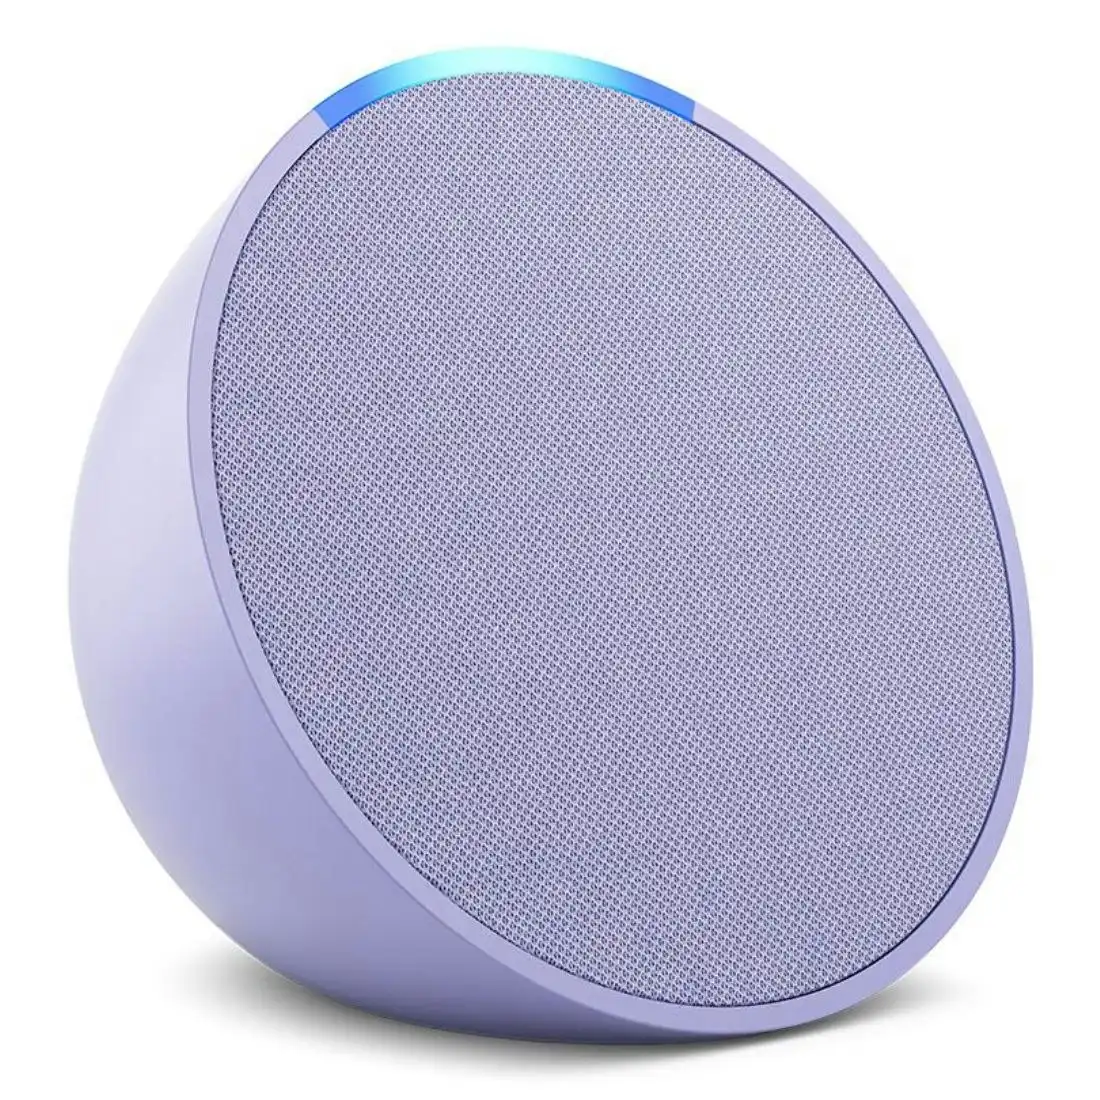 Amazon Echo Pop Compact Smart Speaker - Lavender Bloom